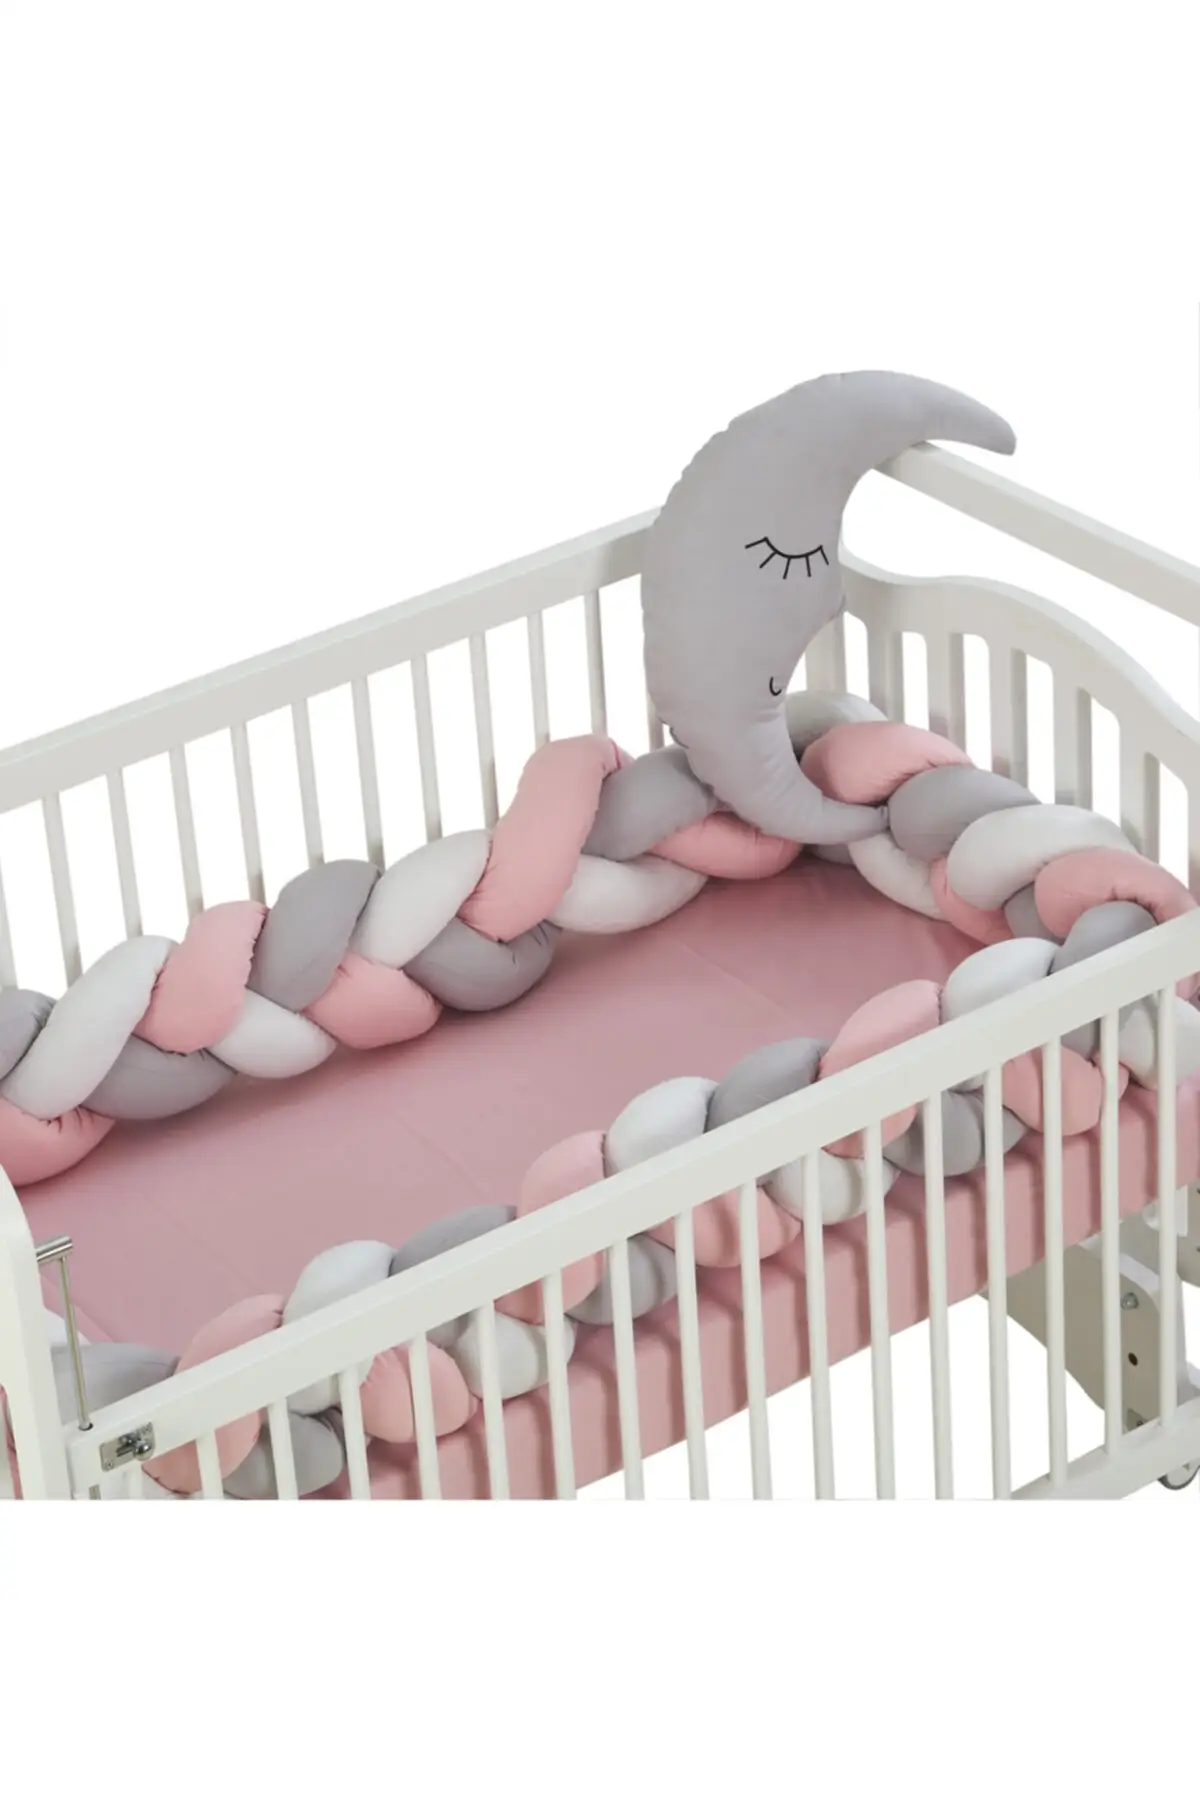 Baby Bumper Bed Braid Knots Pillow Cushion Bumper for Infant Bebe Crib Protector Cot Bumper Room Decor